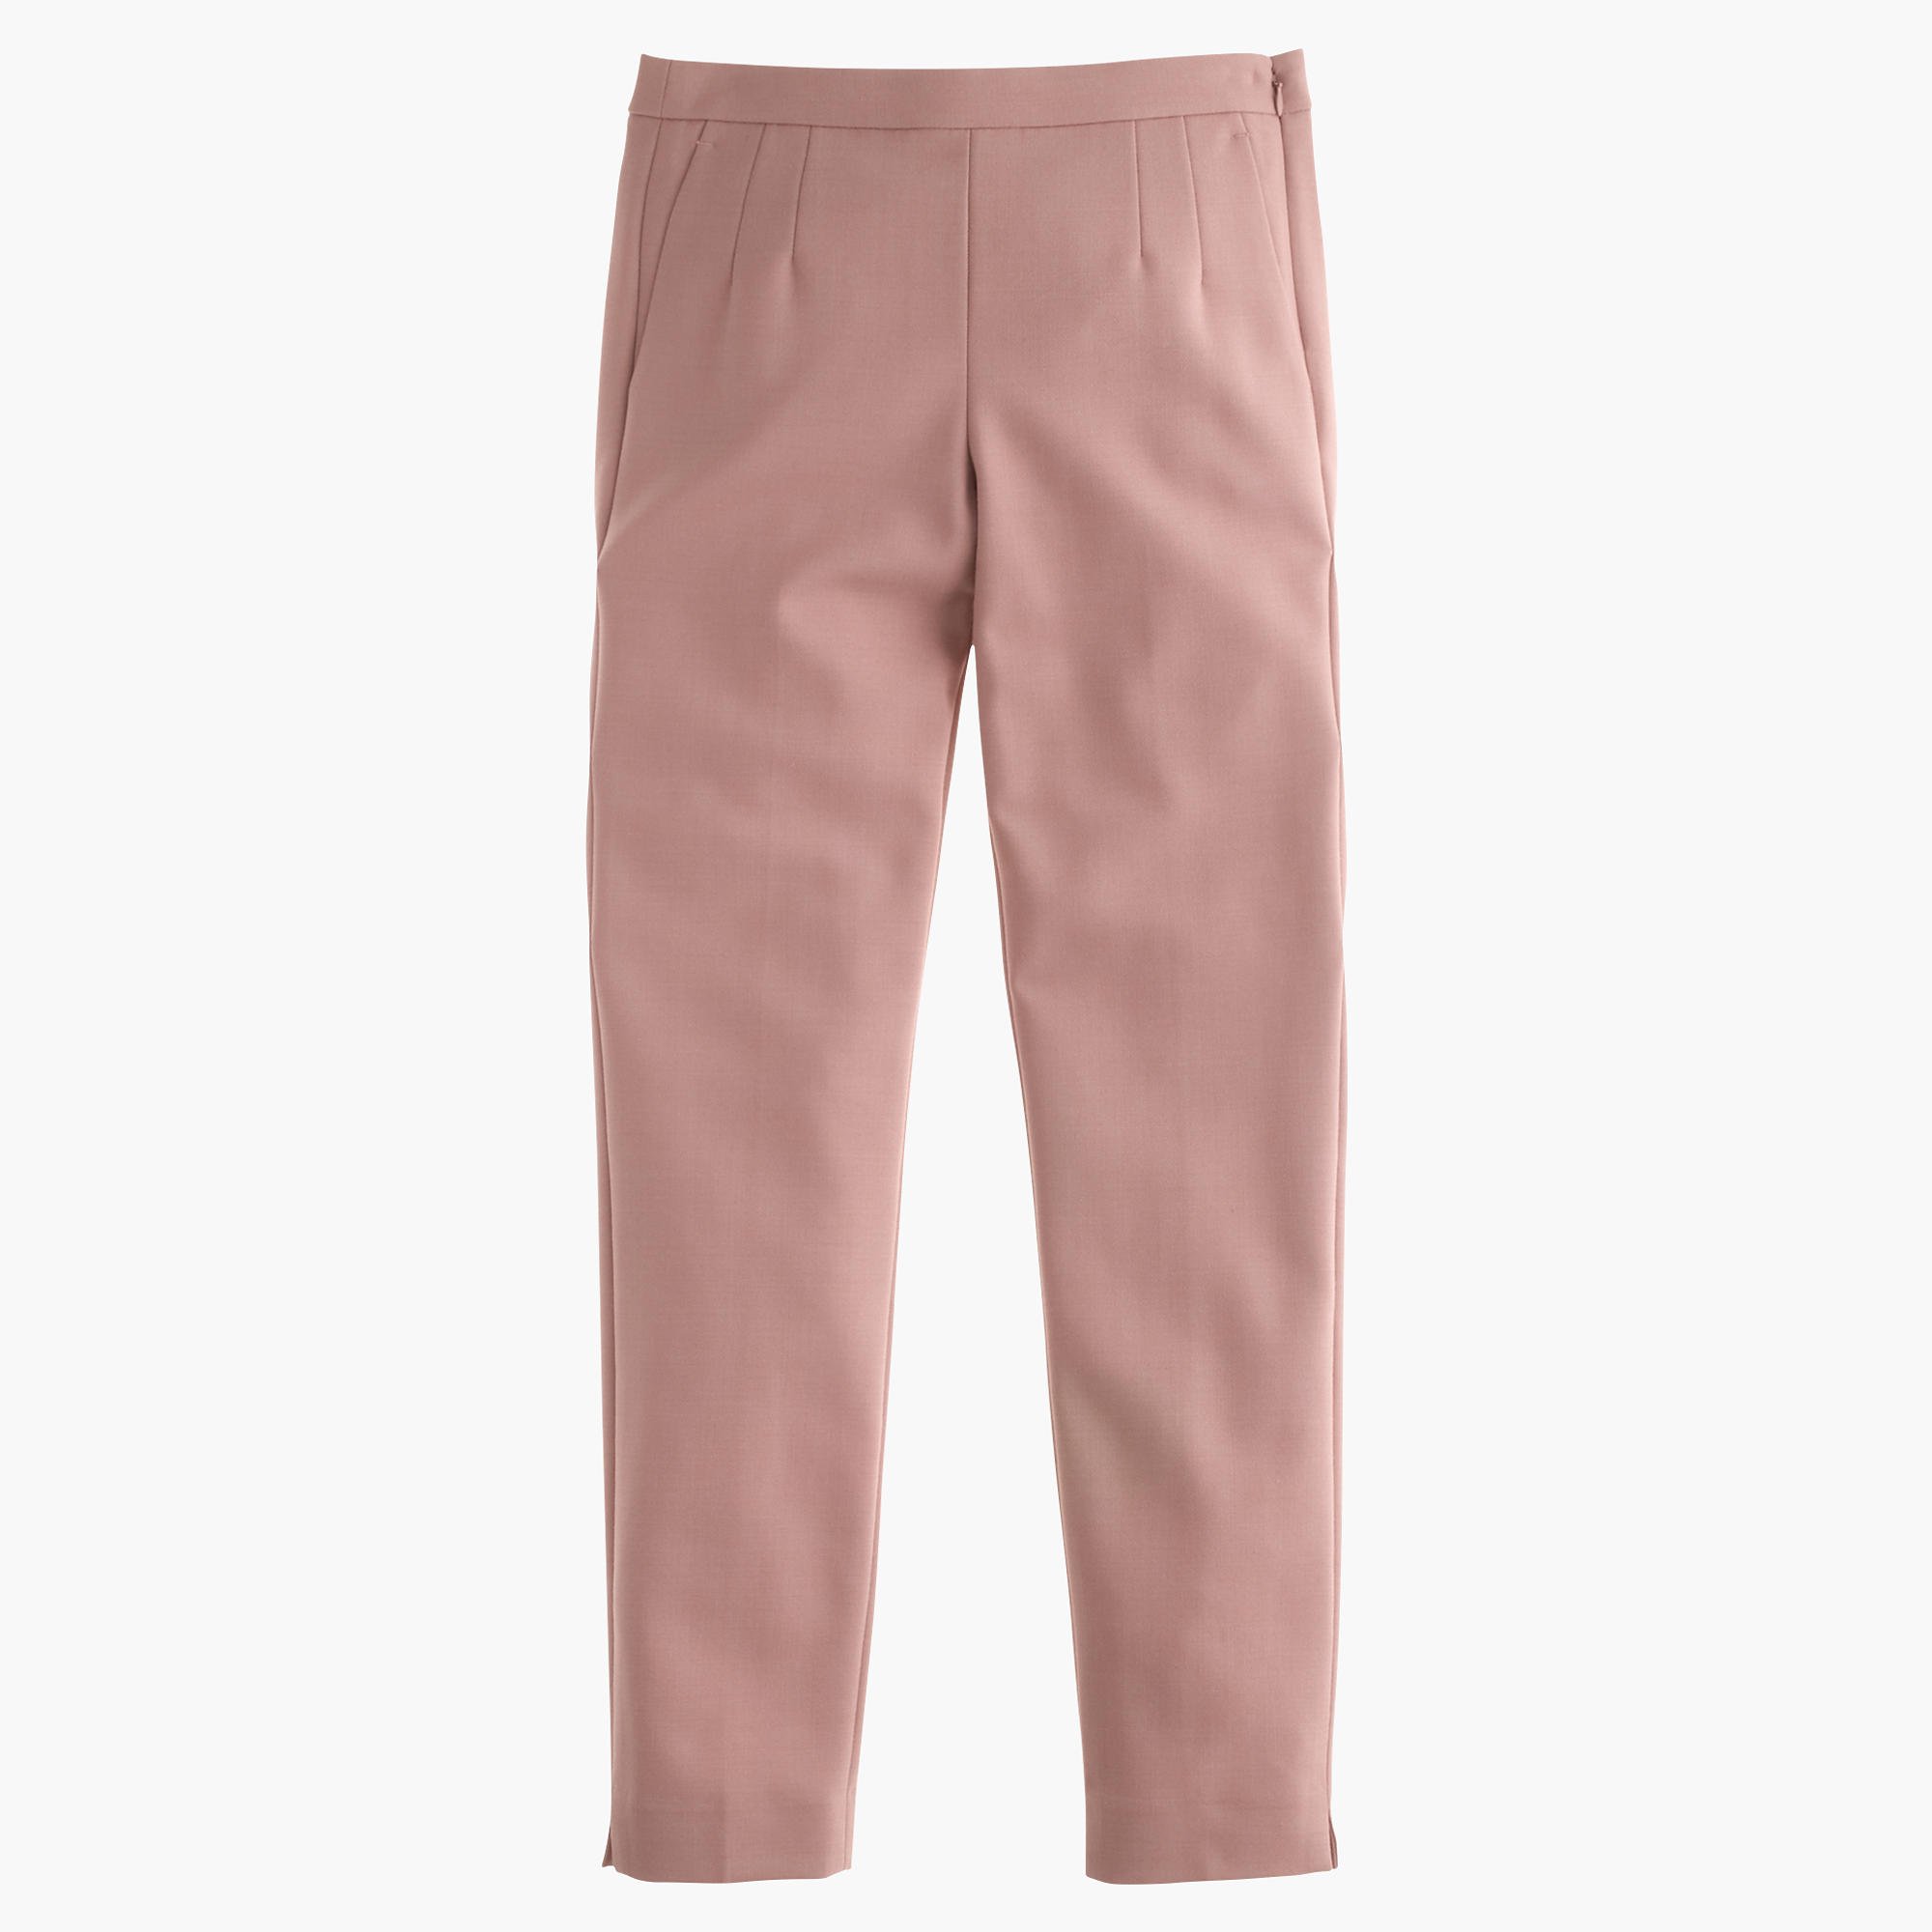 J Crew Pink Pants